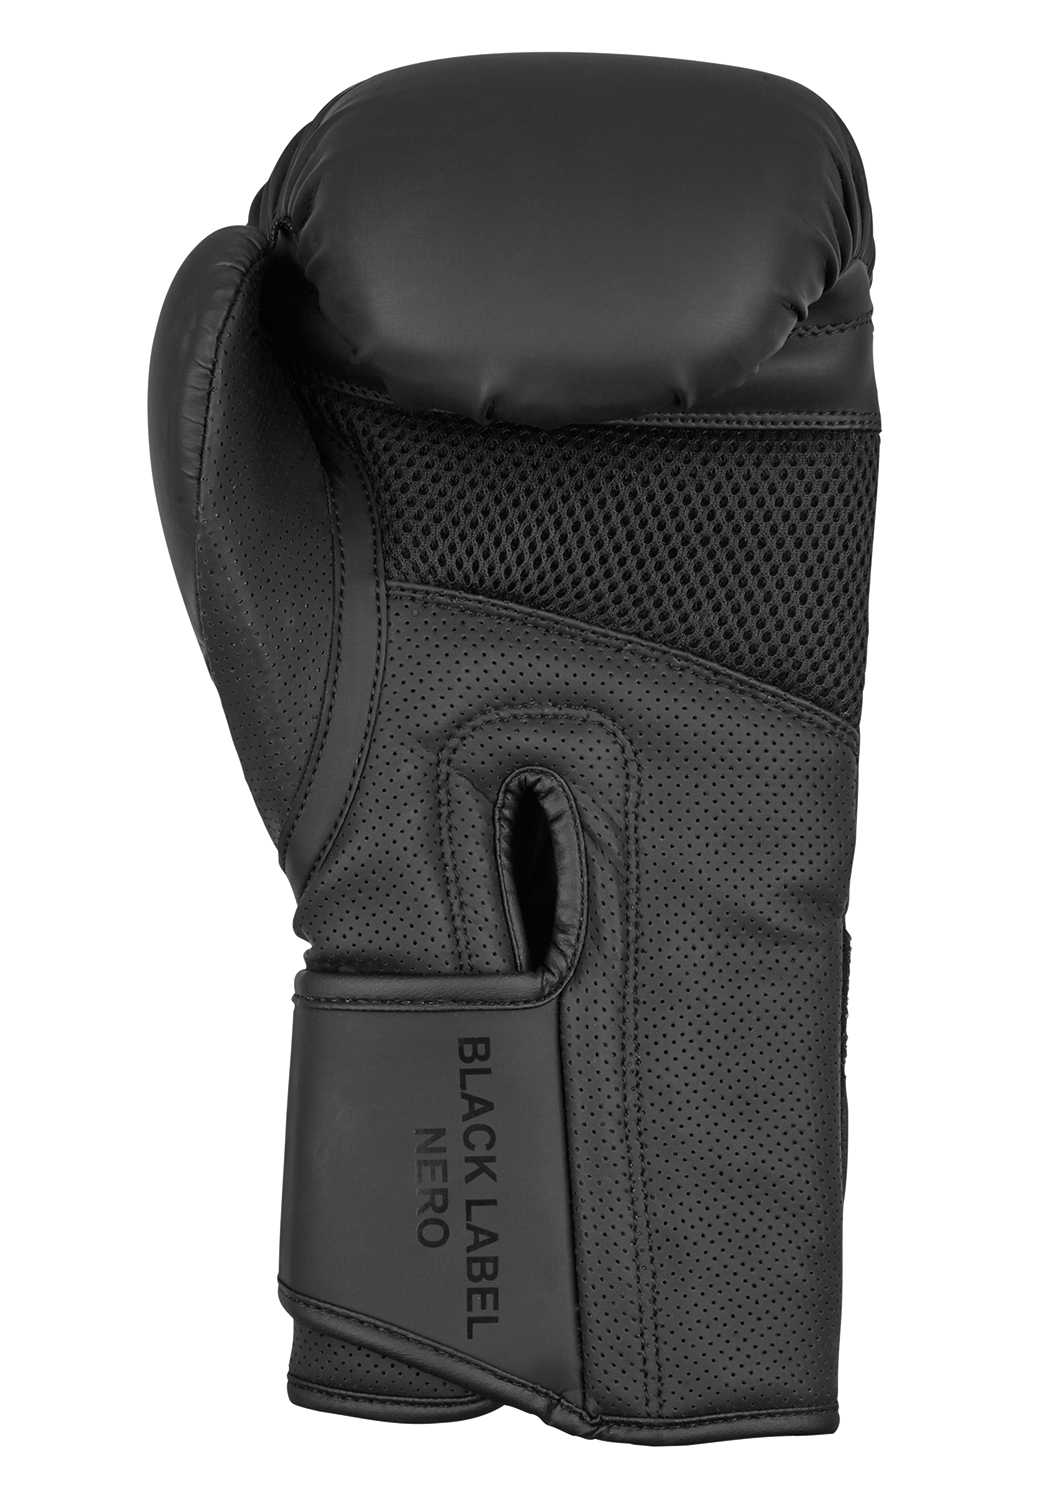 Benlee Black Label Nero boxing gloves 16 oz